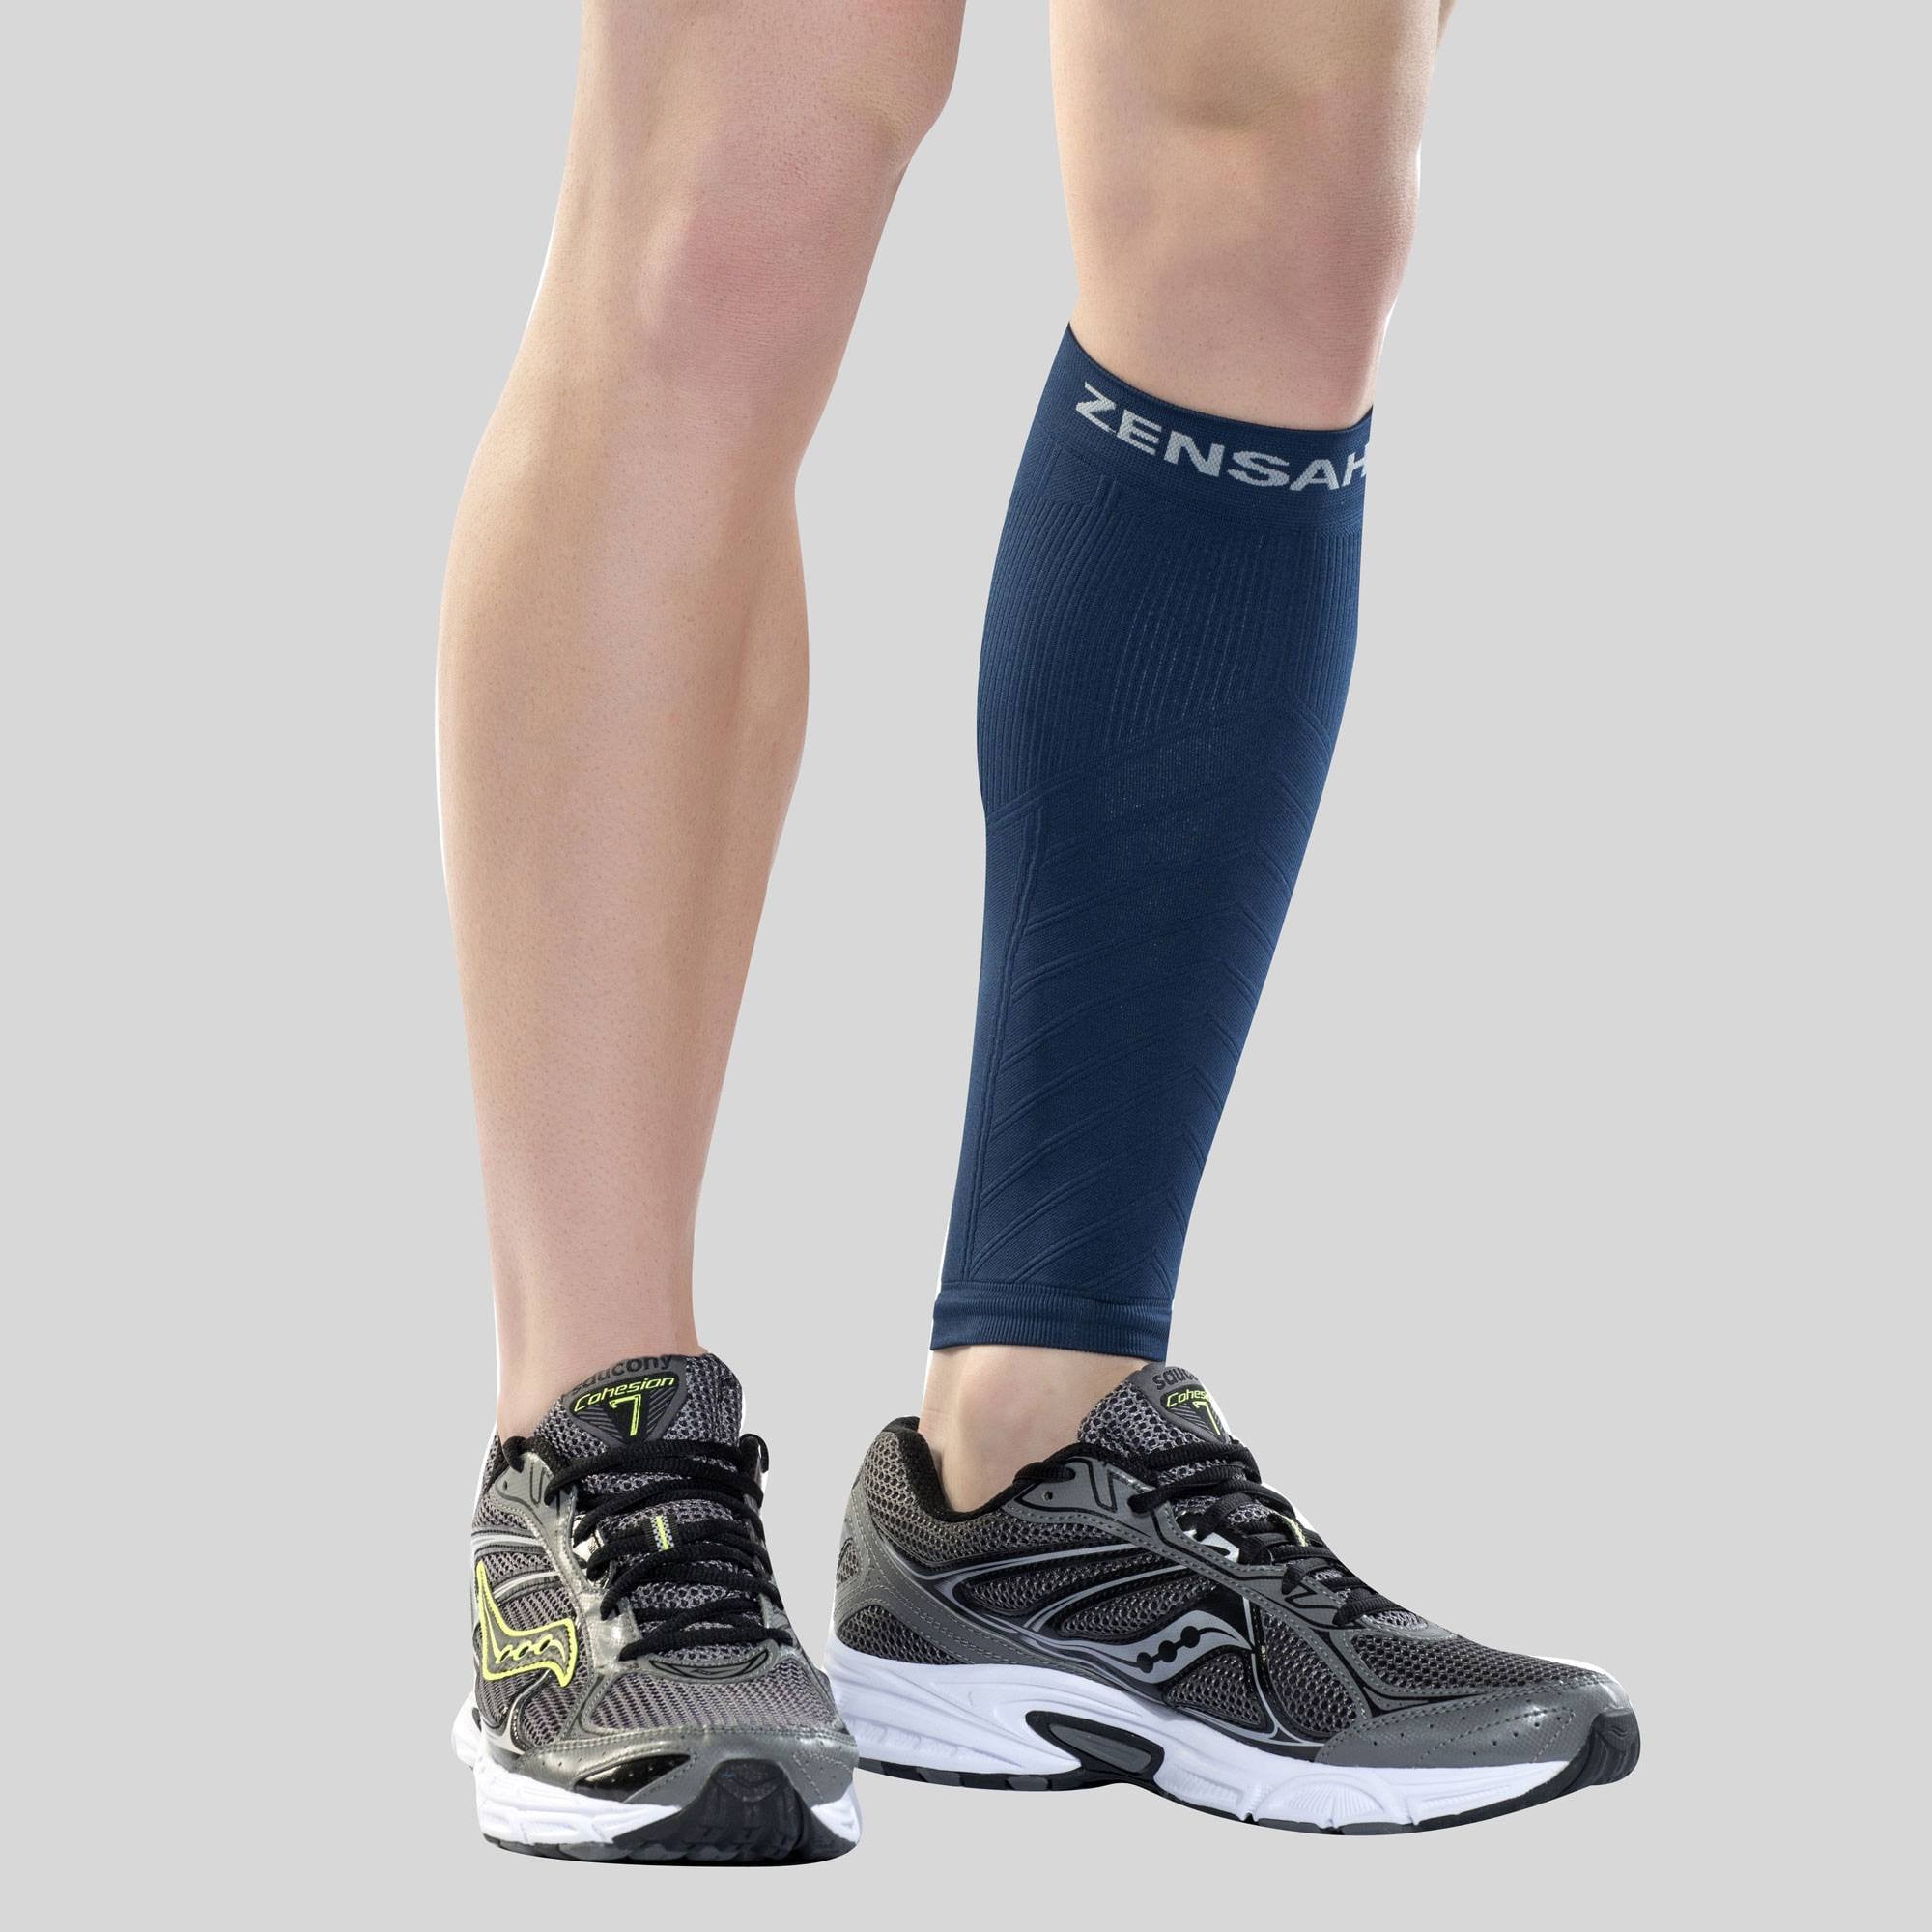 Dr. Shams 2 Pairs Calf Compression Sleeve - Leg Compression Socks